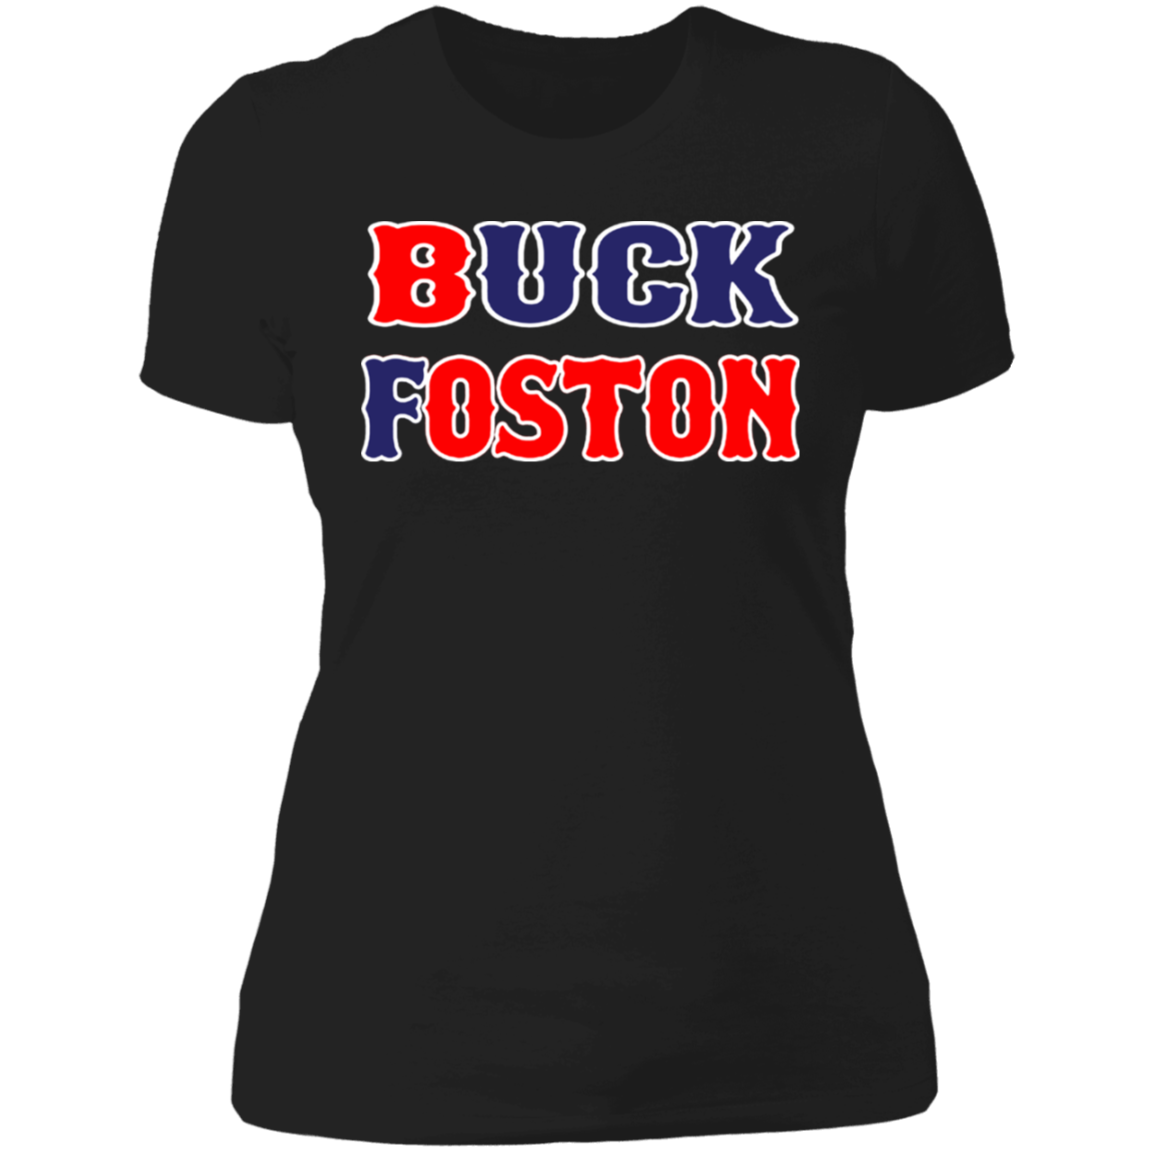 ArtichokeUSA Custom Design. BUCK FOSTON. Ladies' Boyfriend T-Shirt